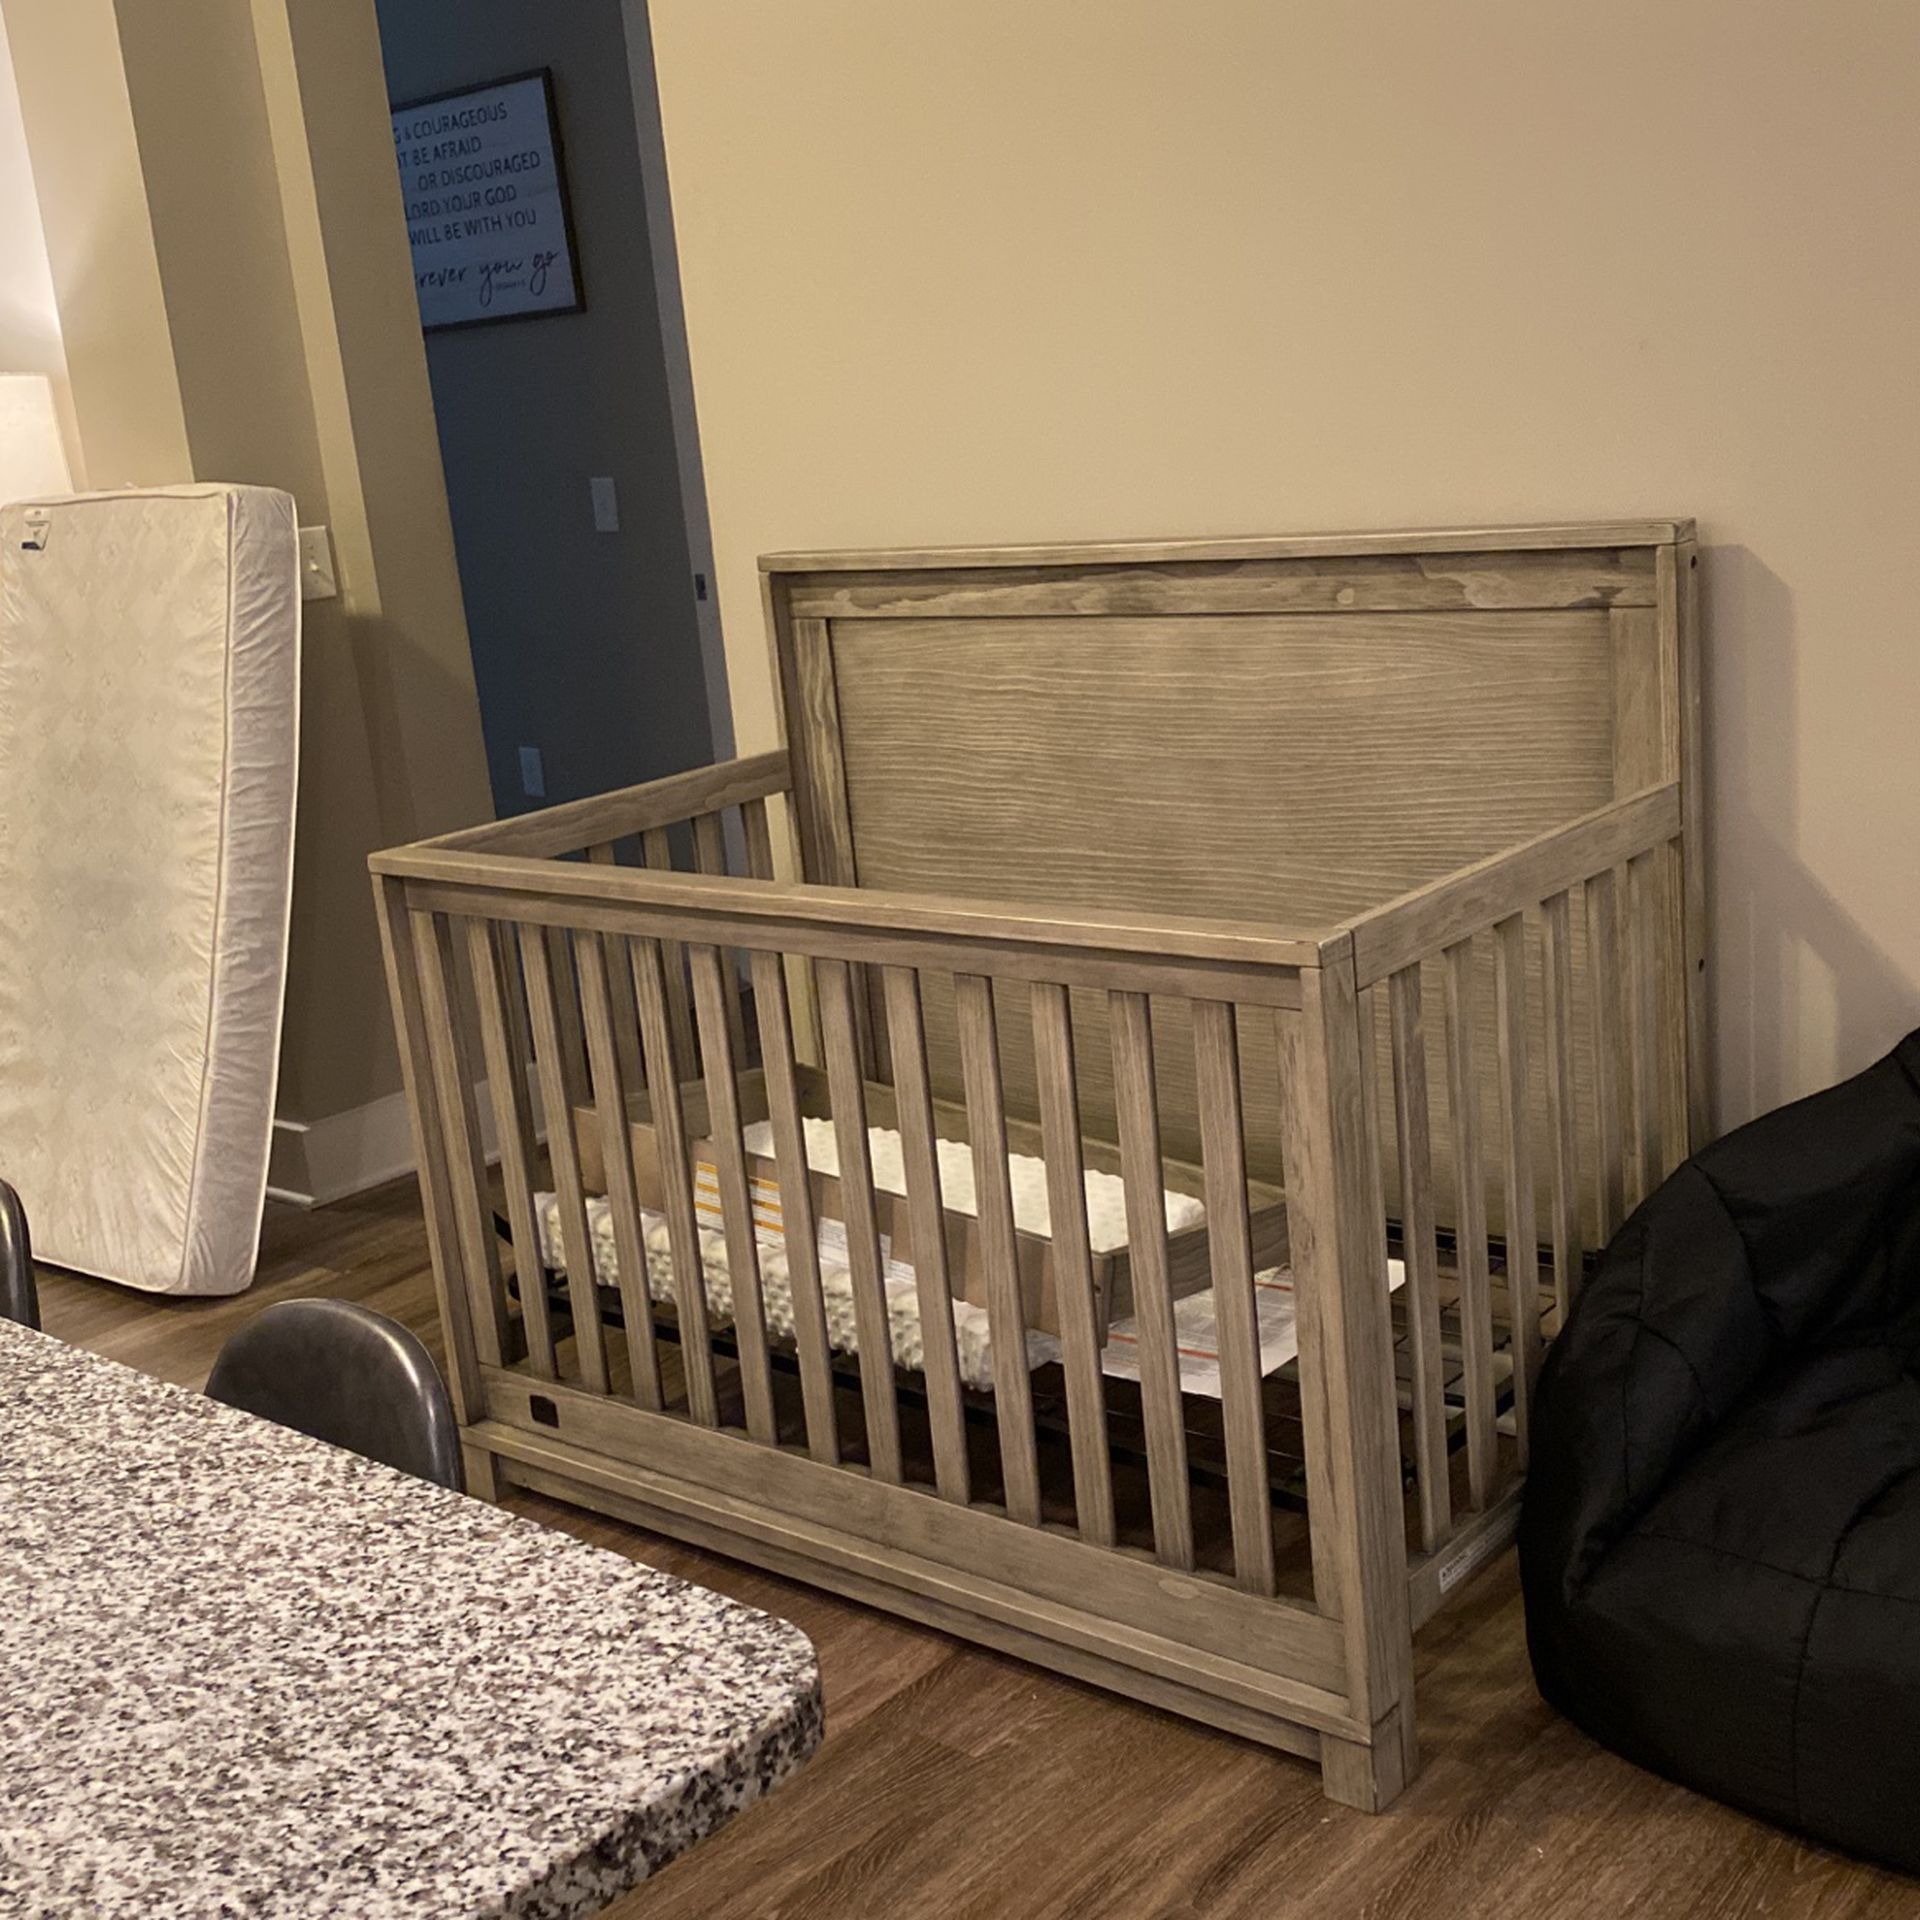 Grey Delta 4 In One Crib w/Mattress And bean Bag Chair